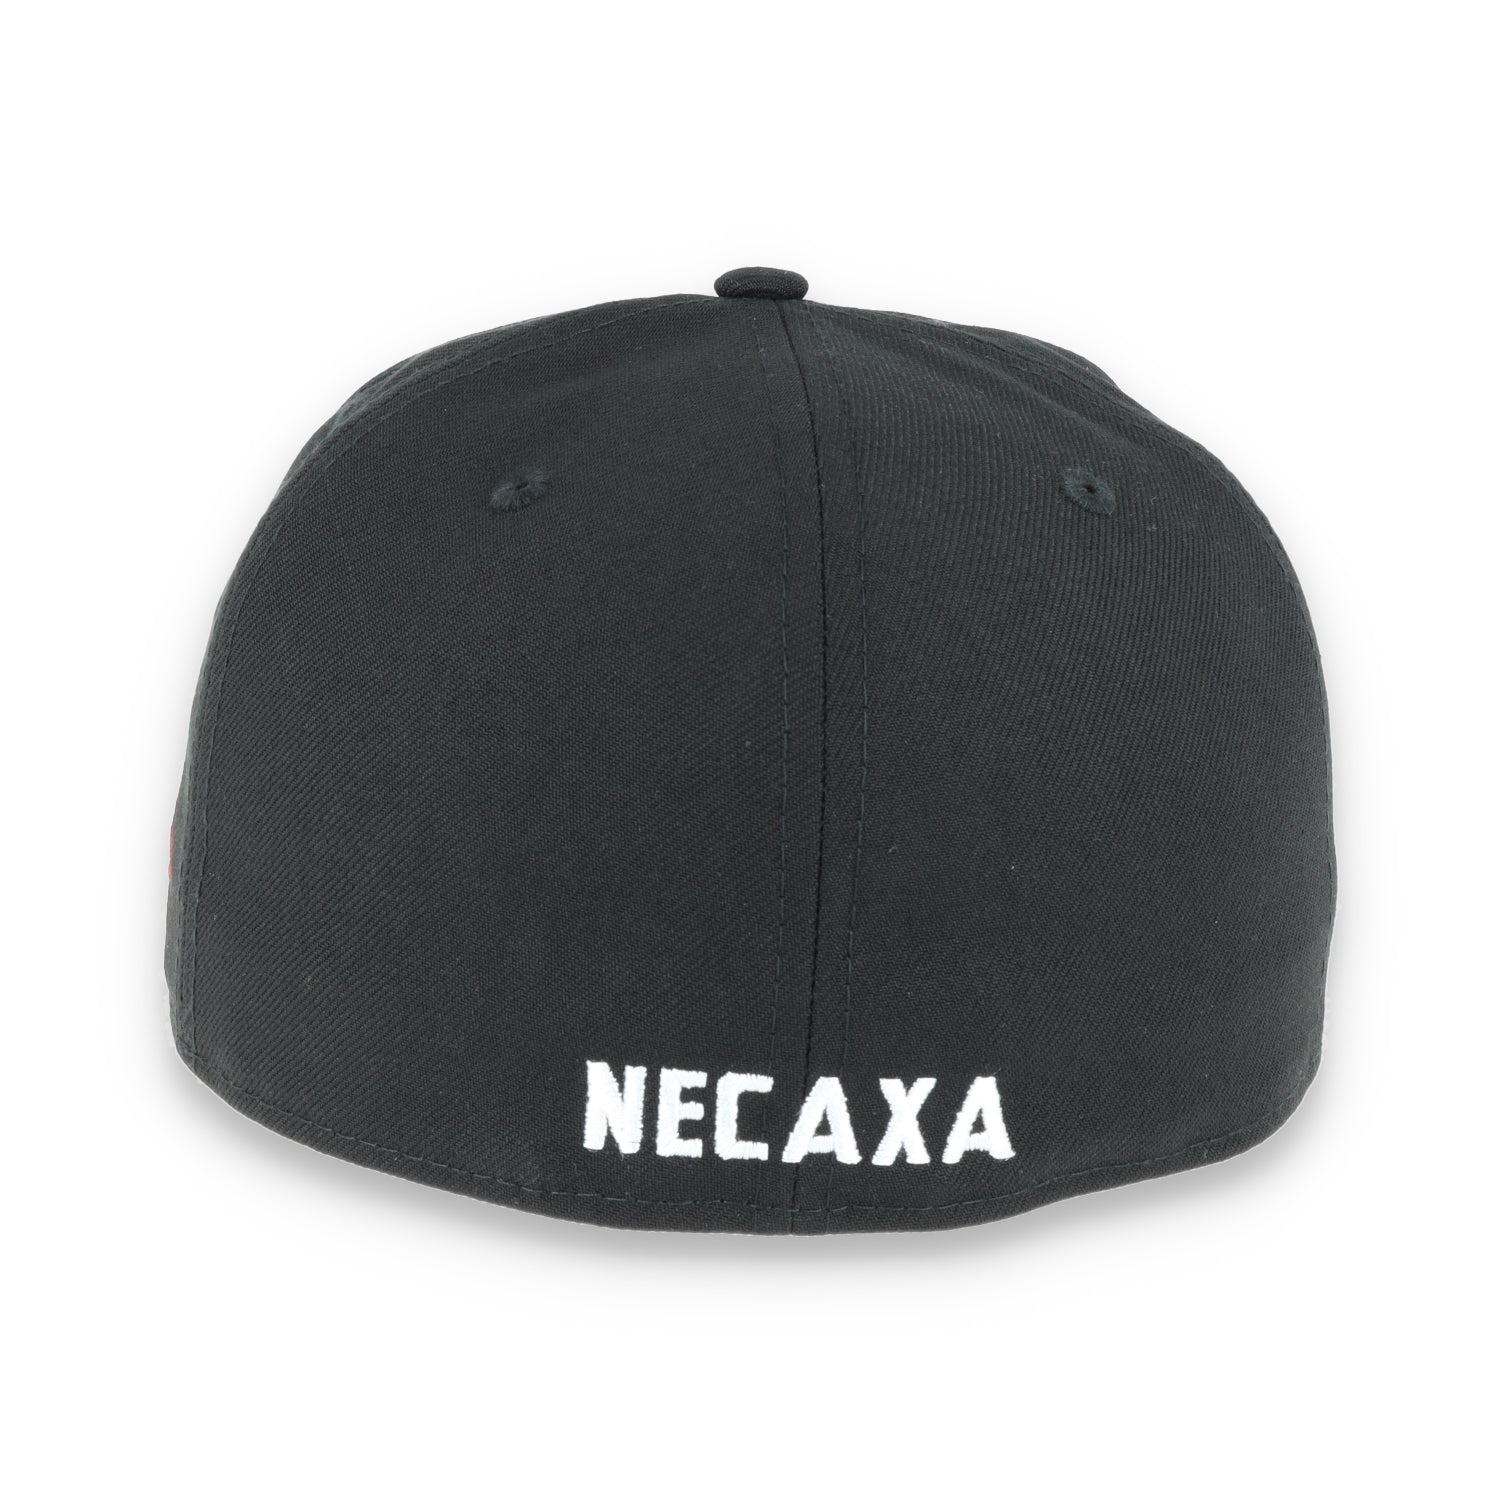 NEW ERA CLUB NECAXA SUGAR SKULL 59FIFTY FITTED HAT